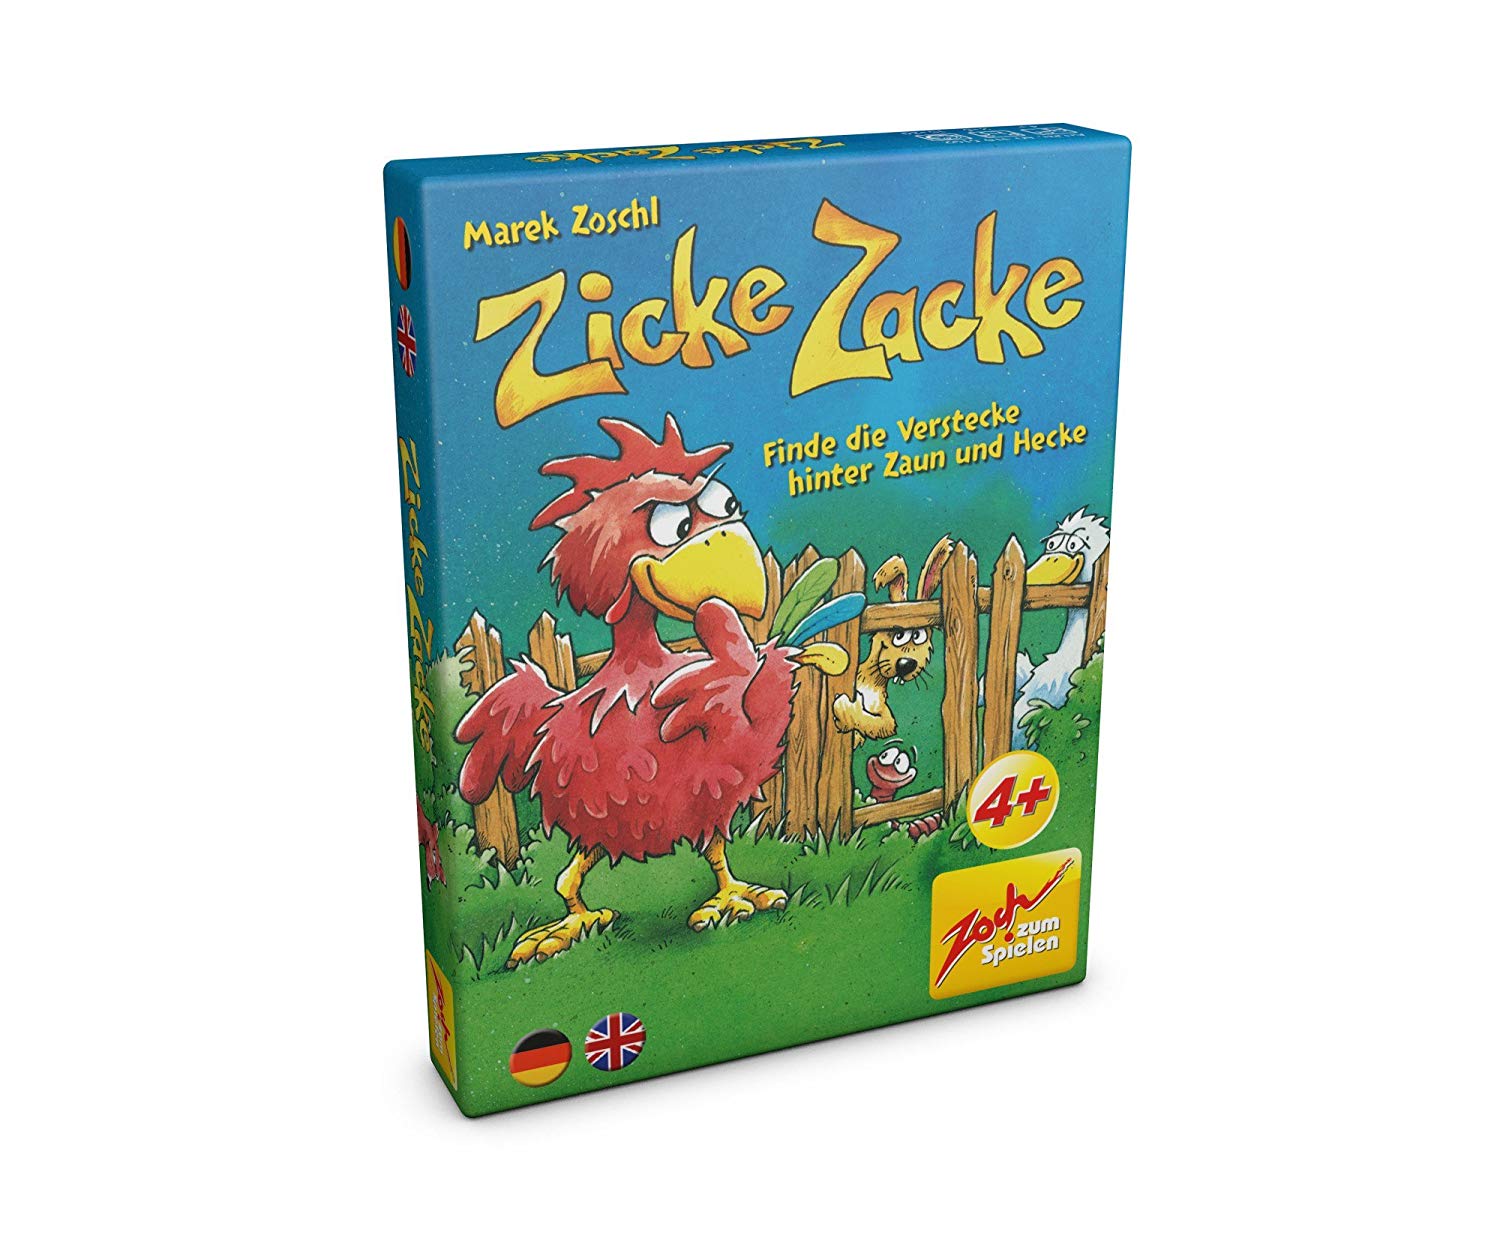 Zoch Noris Games Zicke Zacke Card Game